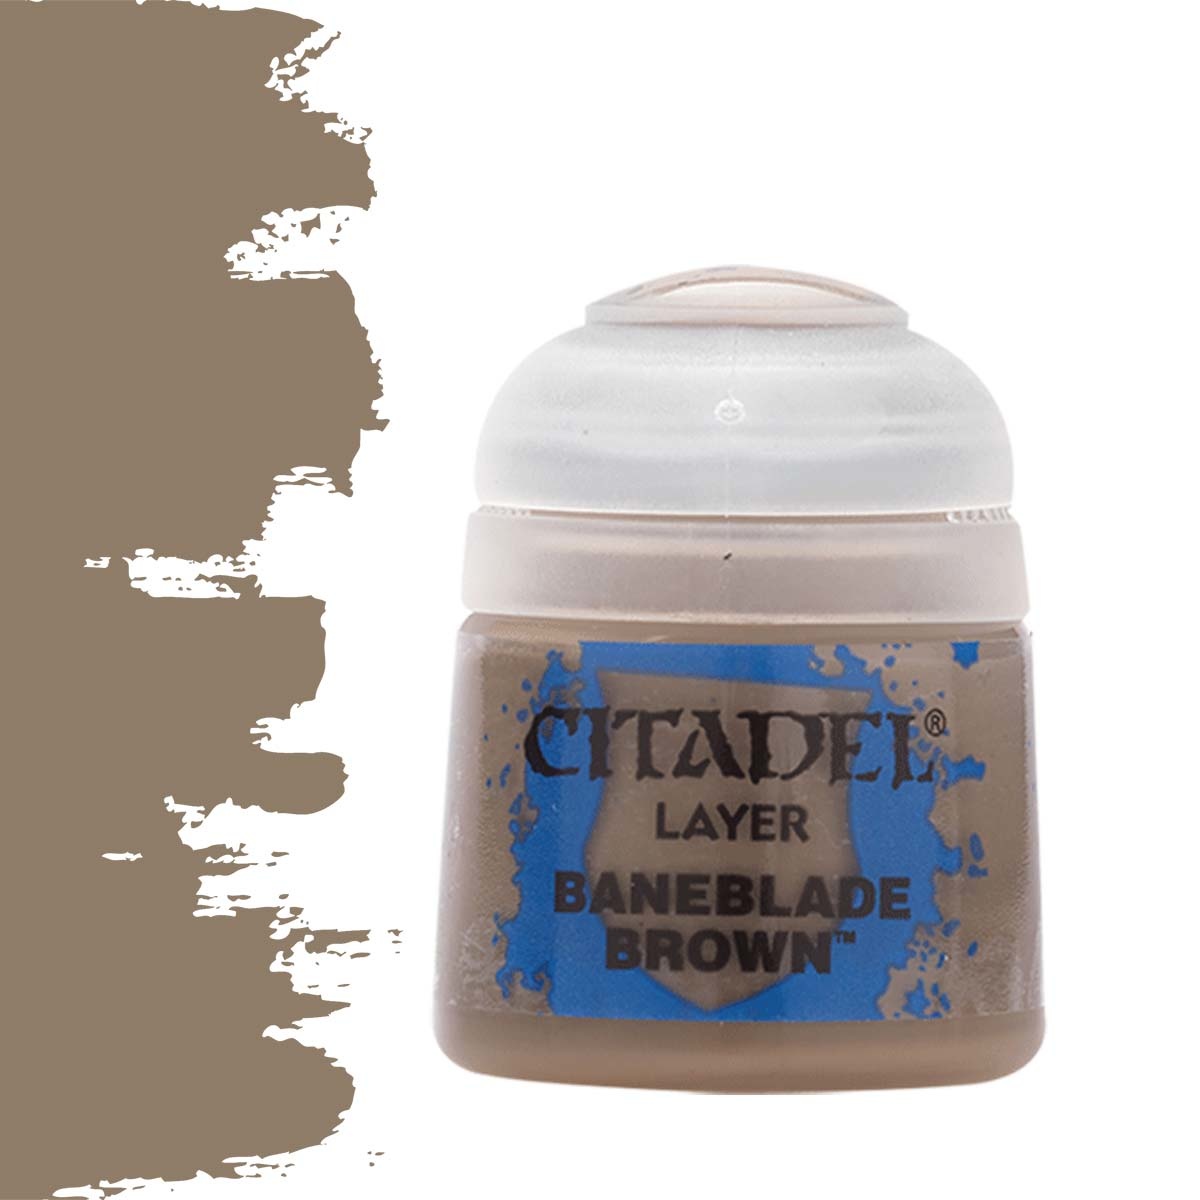 Citadel Baneblade Brown - Layer Paint - 12ml - 22-48 - Buy now at ...